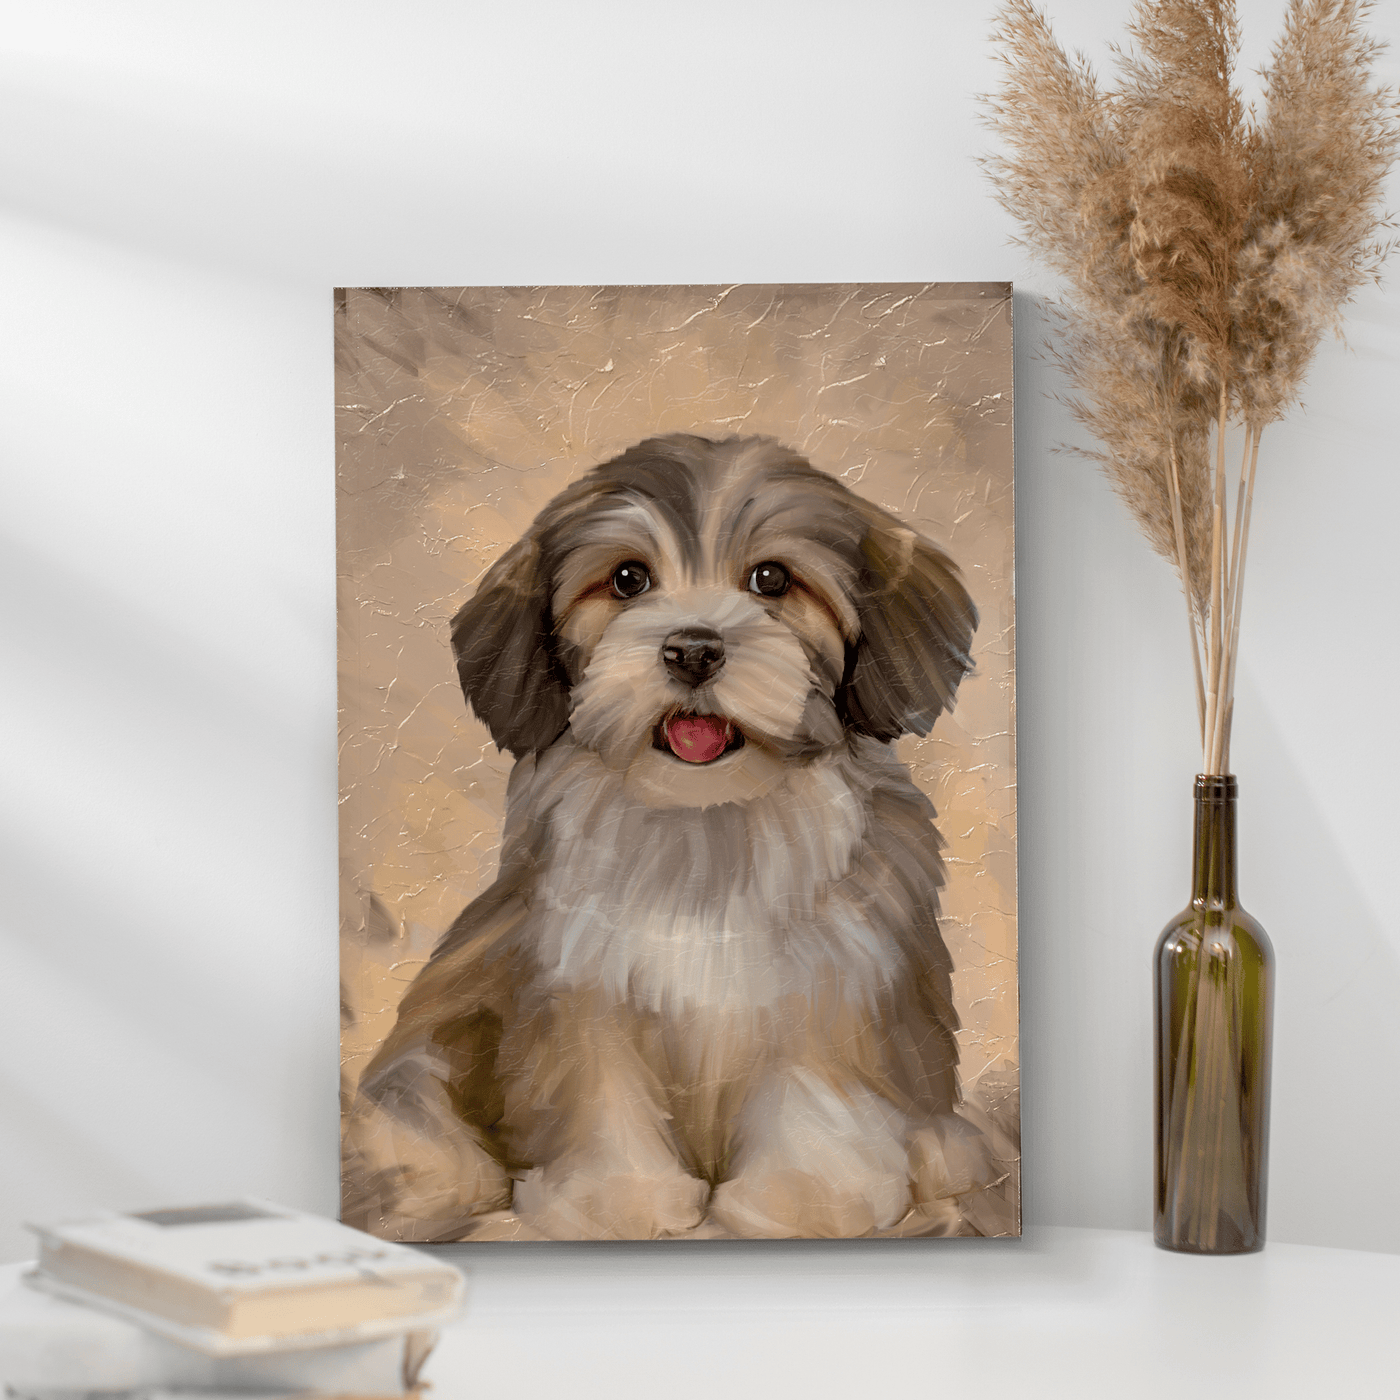 acrylic dog portrait of an adorable fur puppy